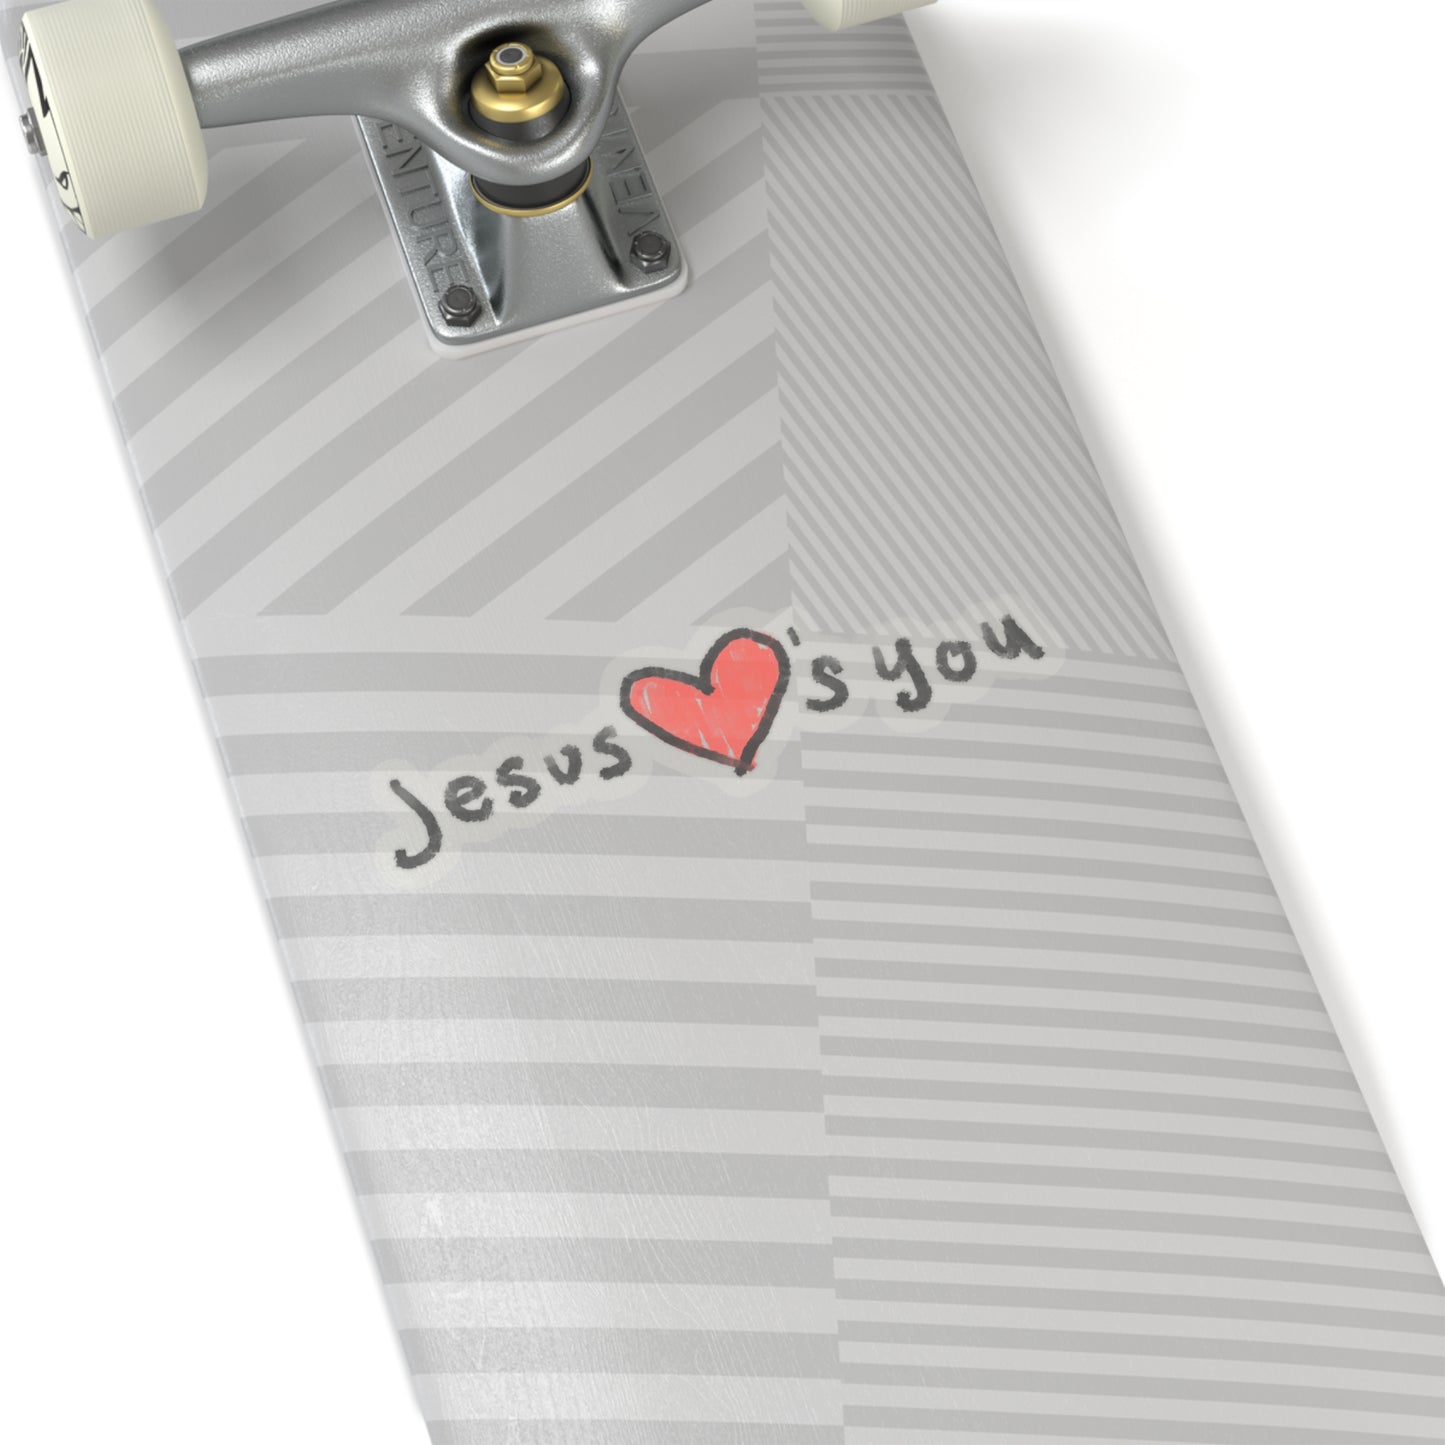 Jesus Loves You Horizontal Sticker